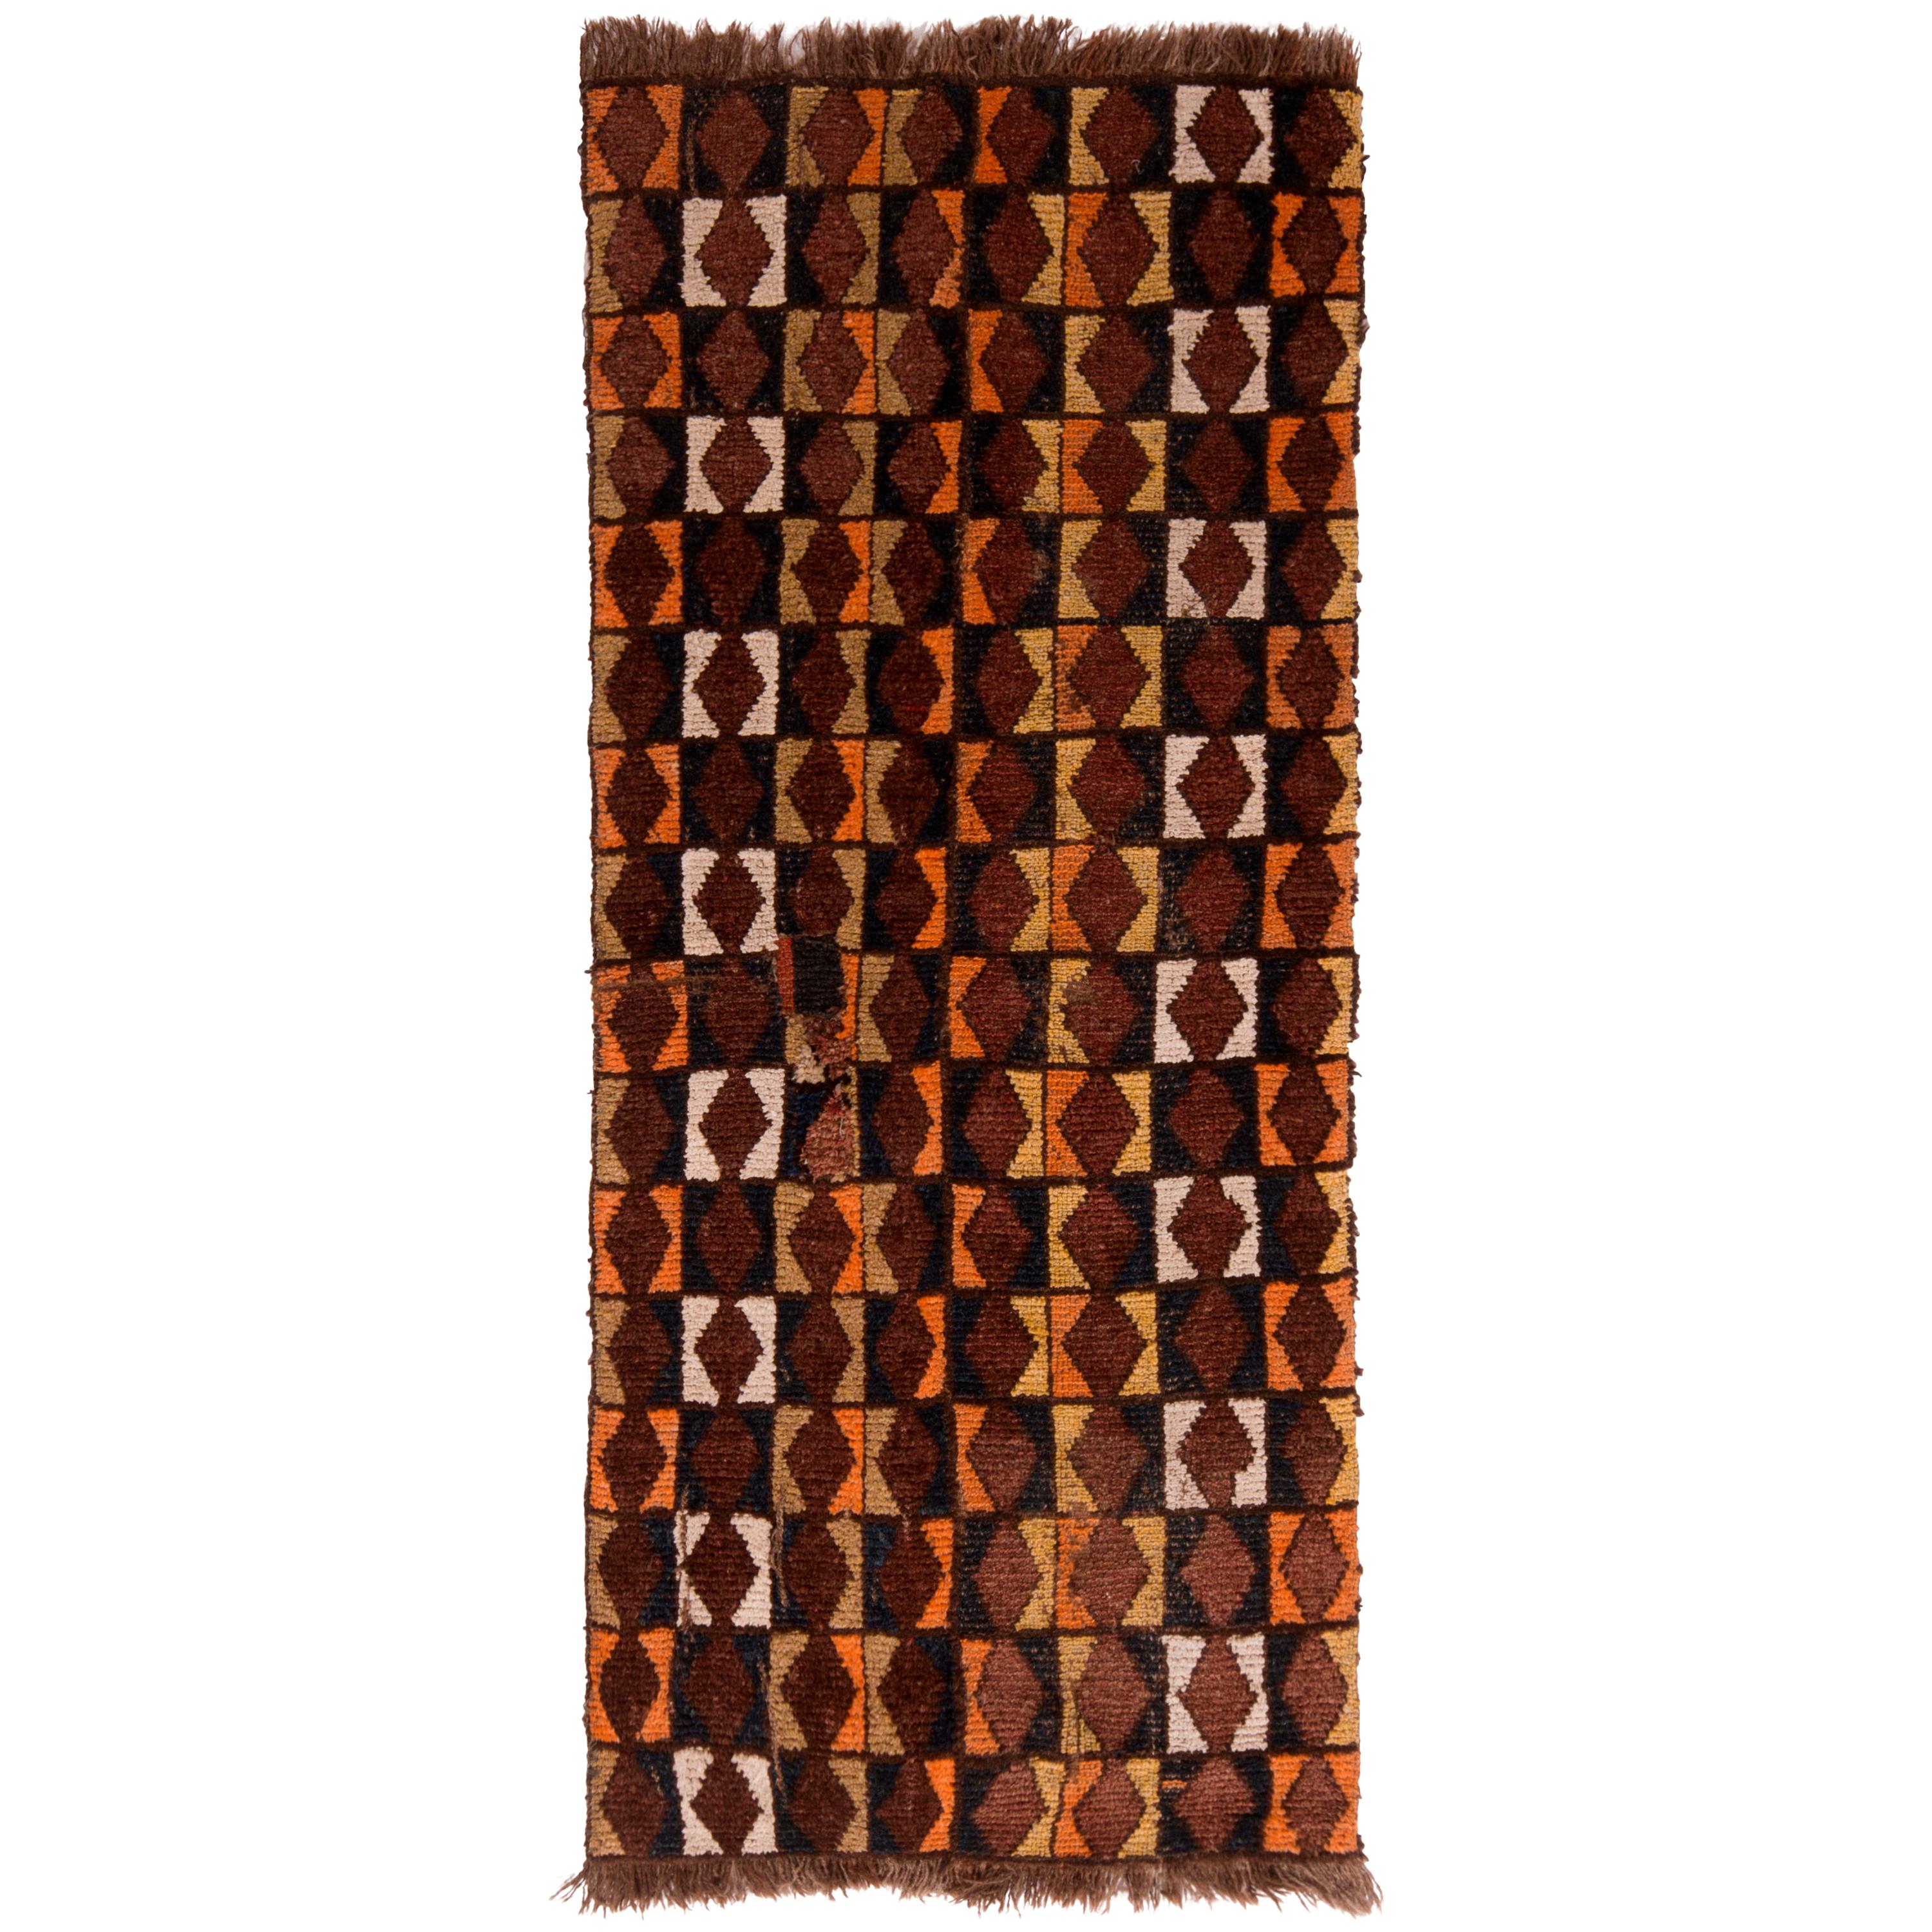 Rare Antique Black Brown Diamond Geometric Wool Iraq Runner Rug